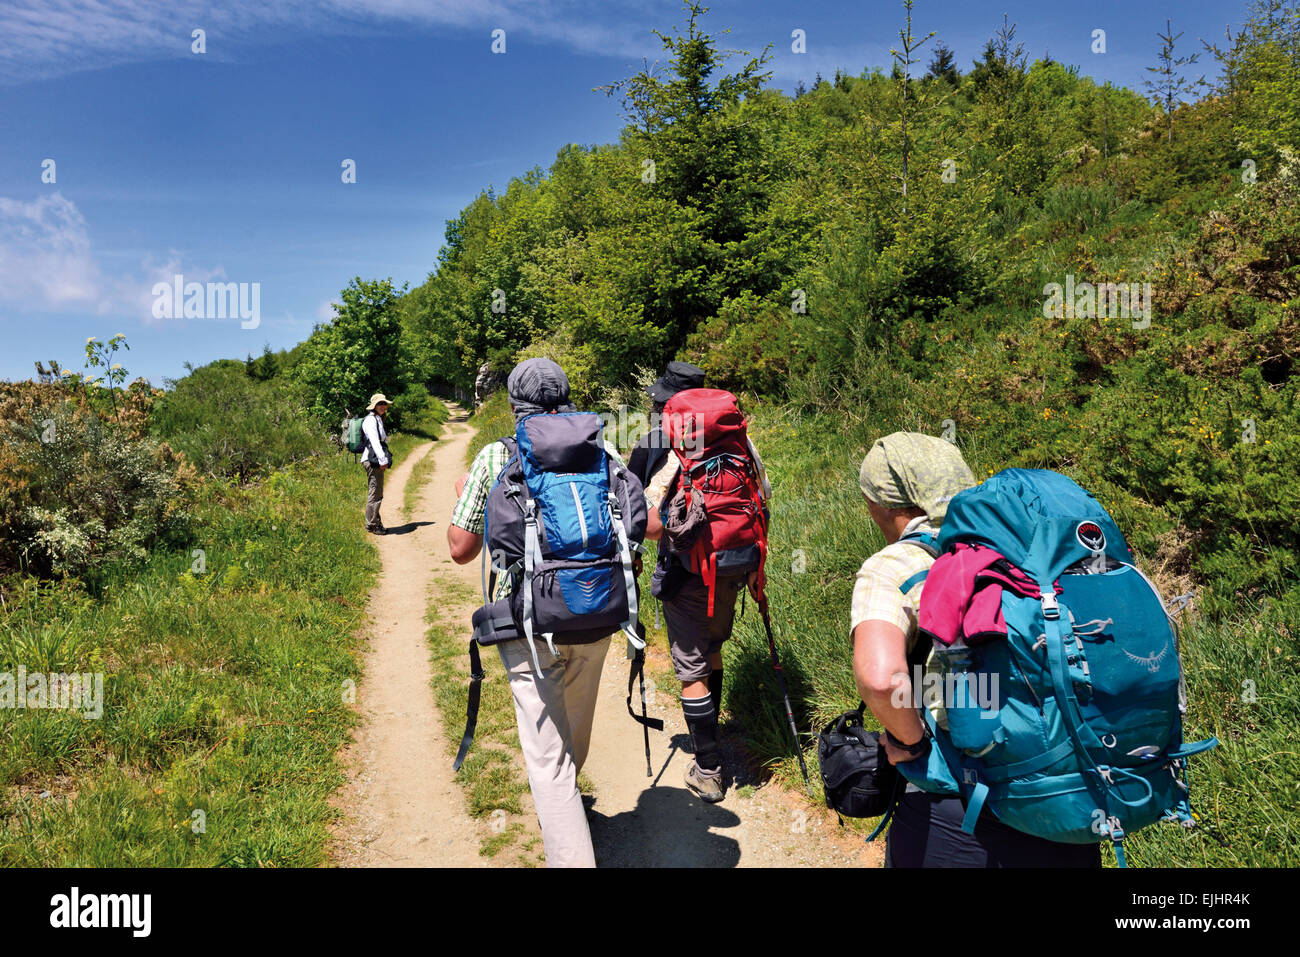 España, Galicia: grupo de peregrinos caminando los últimos kilómetros antes de la aldea de montaña O Cebreiro Foto de stock